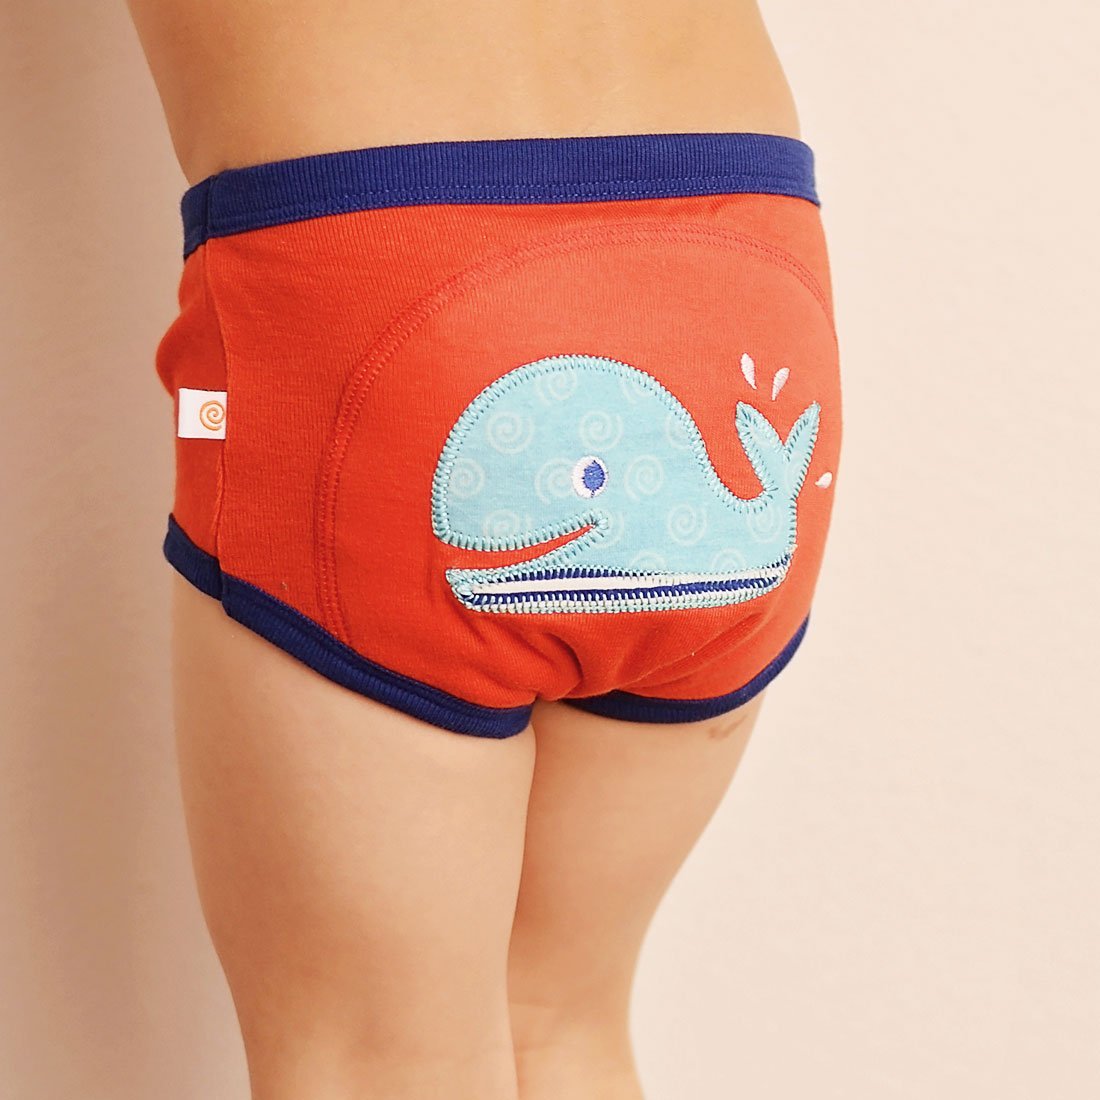 3 Pieces Organic Potty Training Pants Set - Boys Ocean Friends – Princess  and the Pea